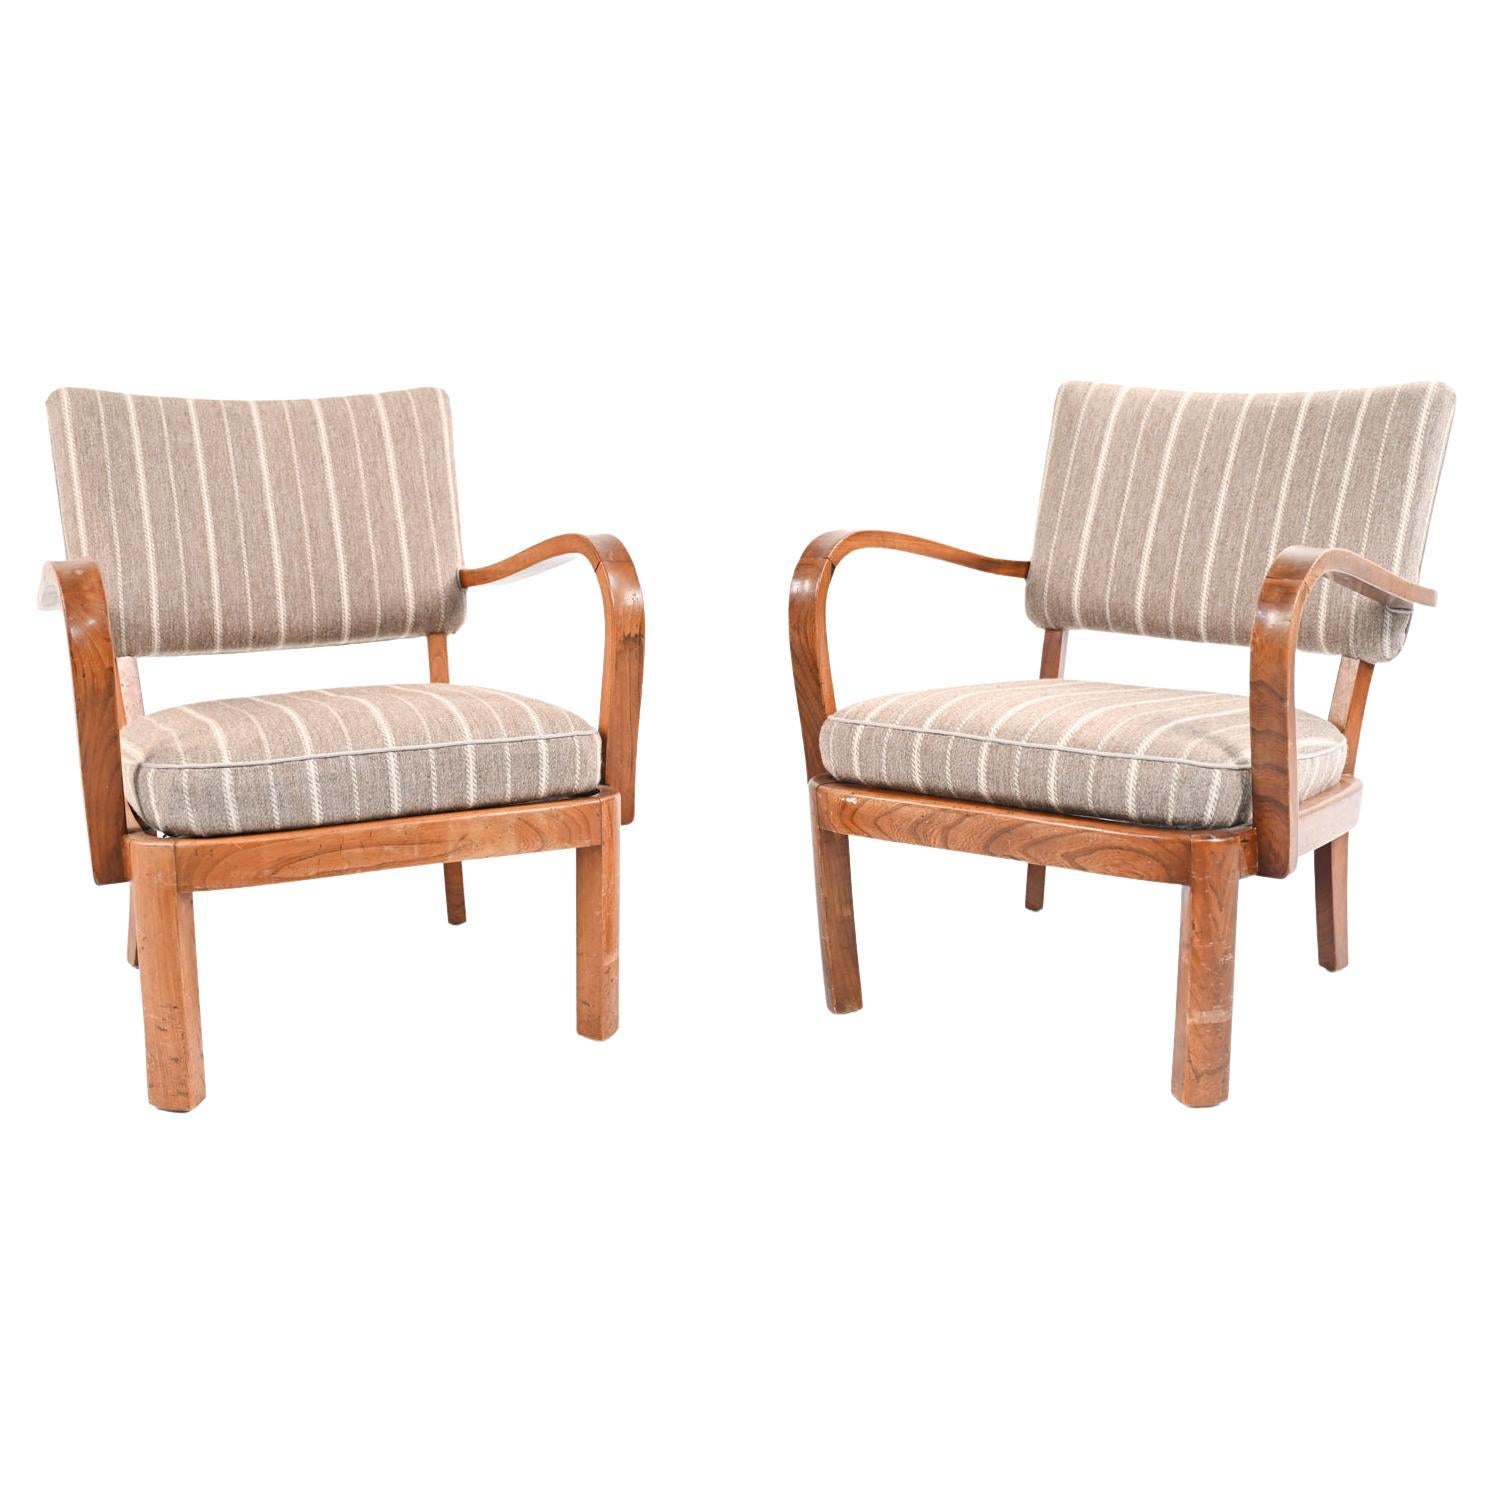 Pair of Scandinavian Elm Wood Bridge Chairs, 1940's-1950's